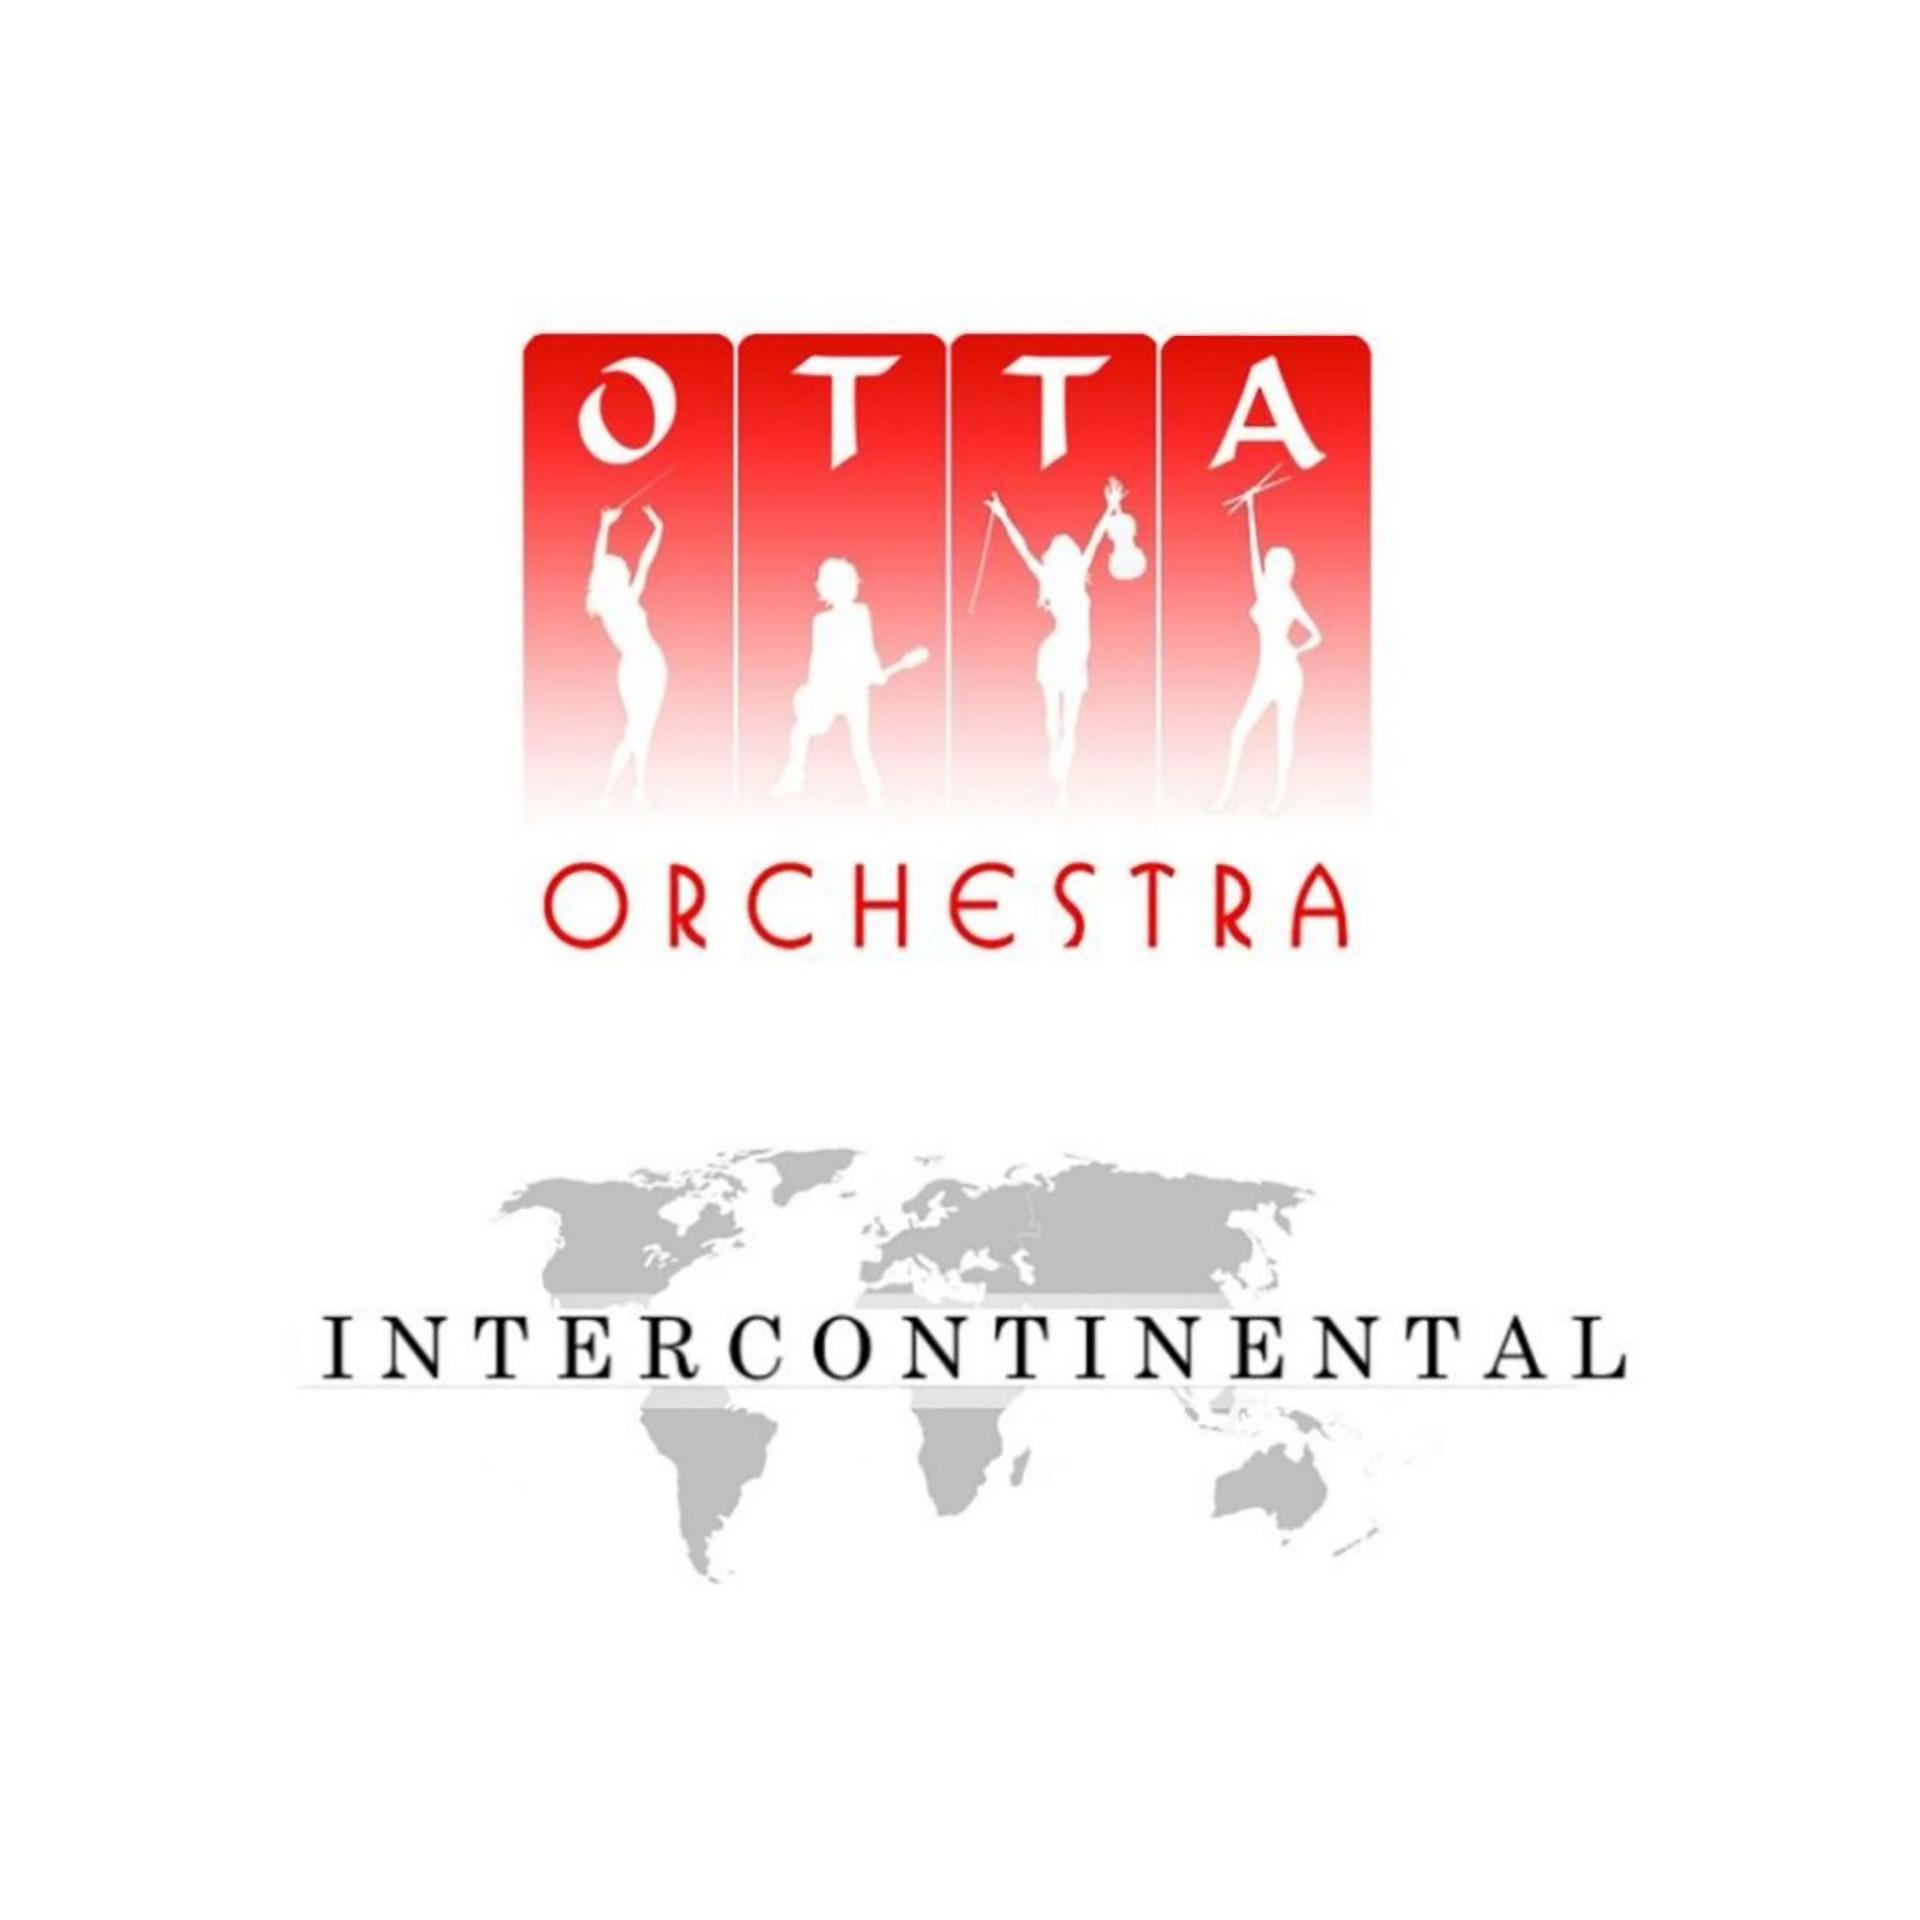 Orchestra royal safary. Группа Otta Orchestra. Otta-Orchestra Royal Safari обложка. Отта оркестр Роял сафари. Otta-Orchestra - INTERCONTINENTAL (2010).